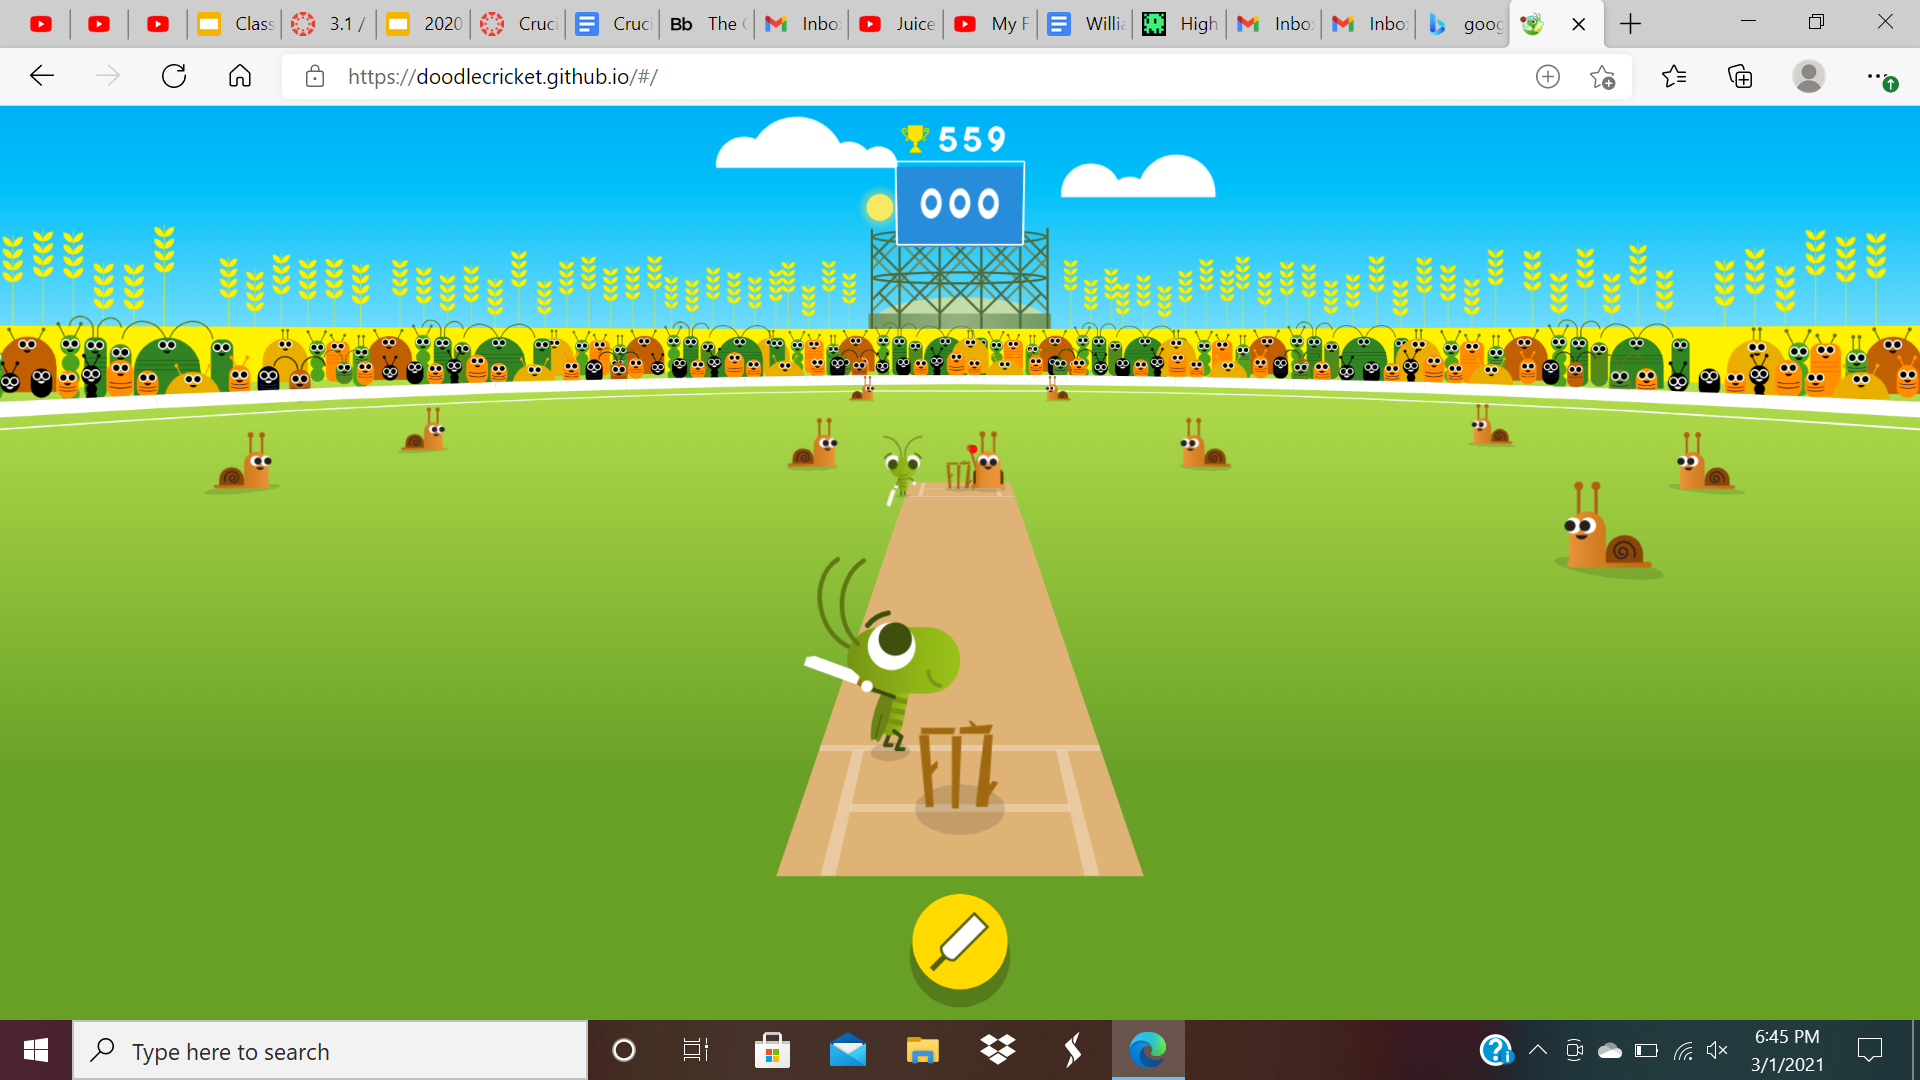 Google Doodle Cricket (Web) high score by META